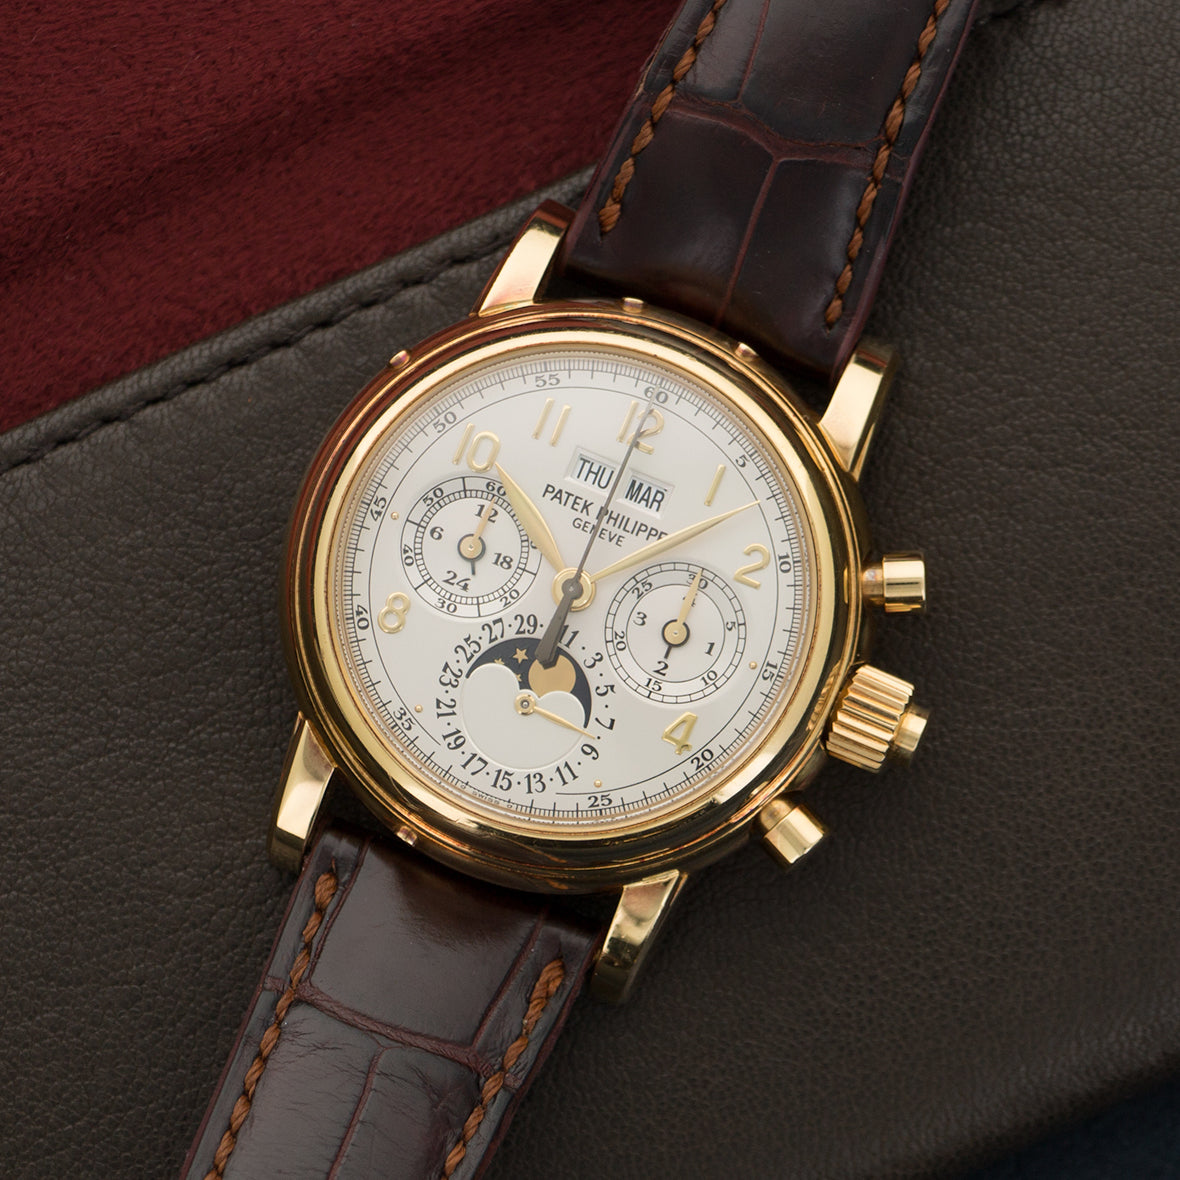 Patek Philippe - Patek Philippe Yellow Gold Perpetual Split Seconds Chrono Watch Ref. 5004 - The Keystone Watches